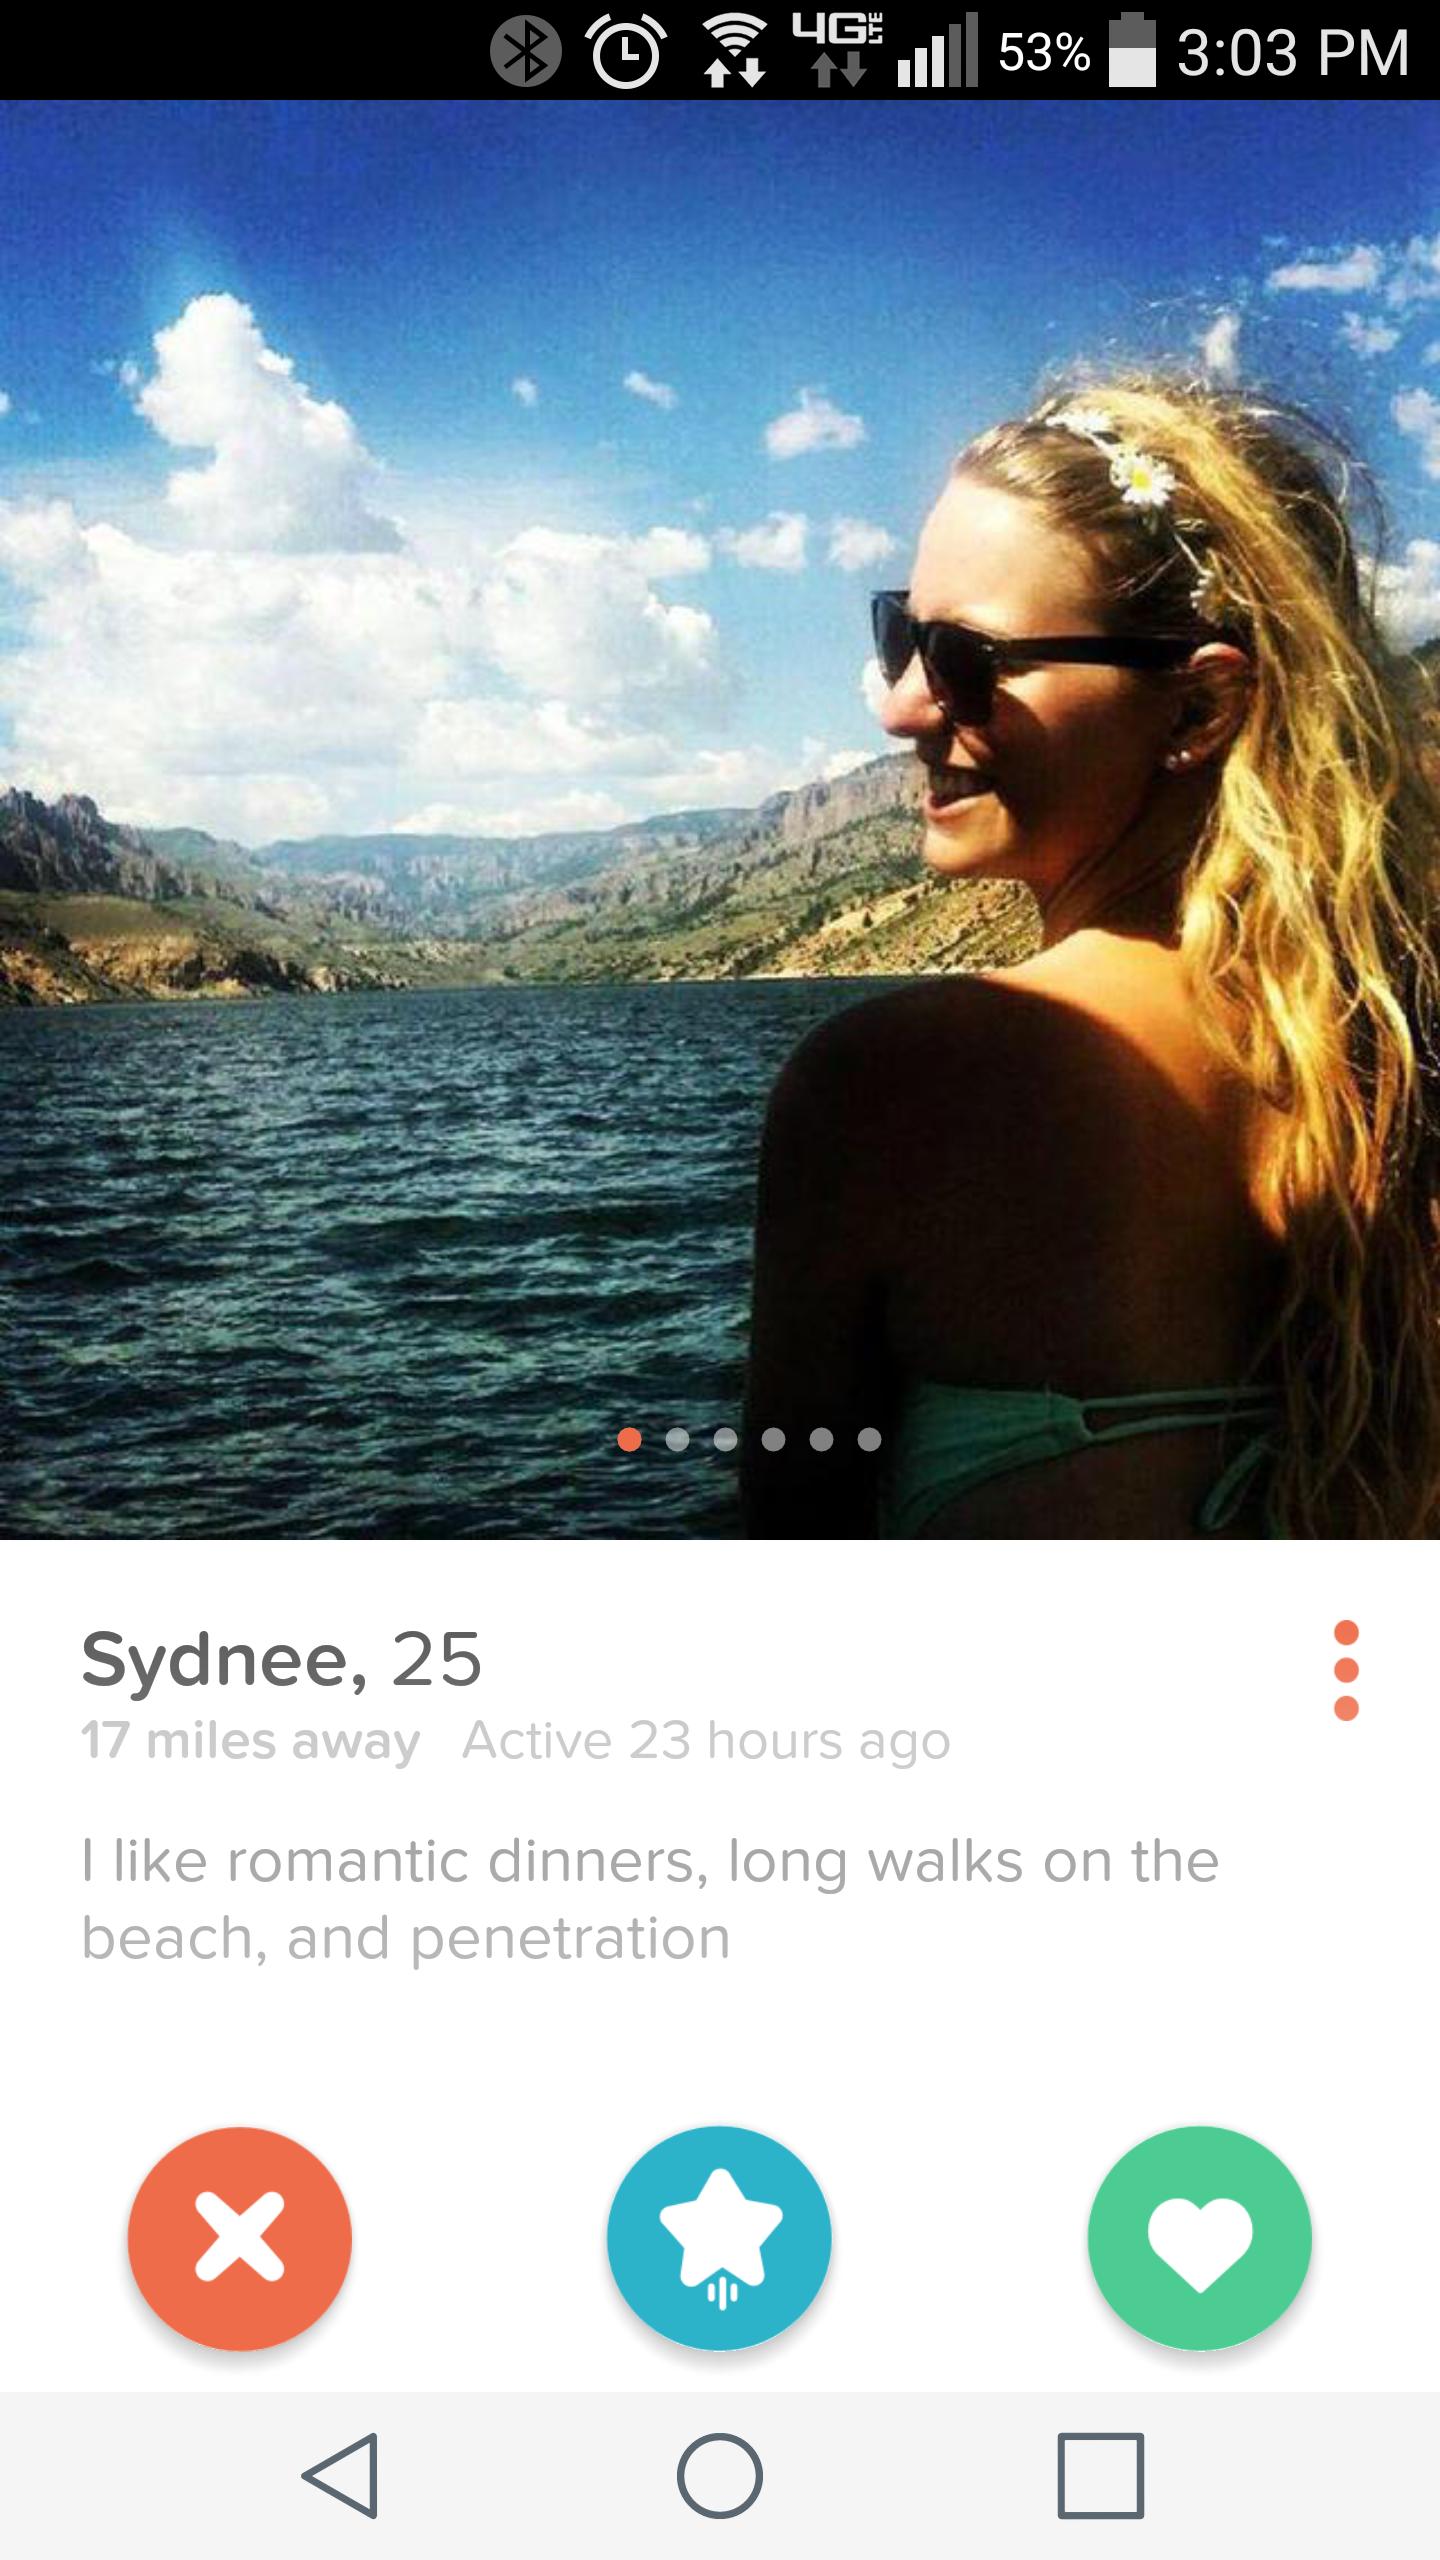 tinder - sky - $ 46.|| 53% Sydnee, 25 17 miles away Active 23 hours ago I romantic dinners, long walks on the beach, and penetration